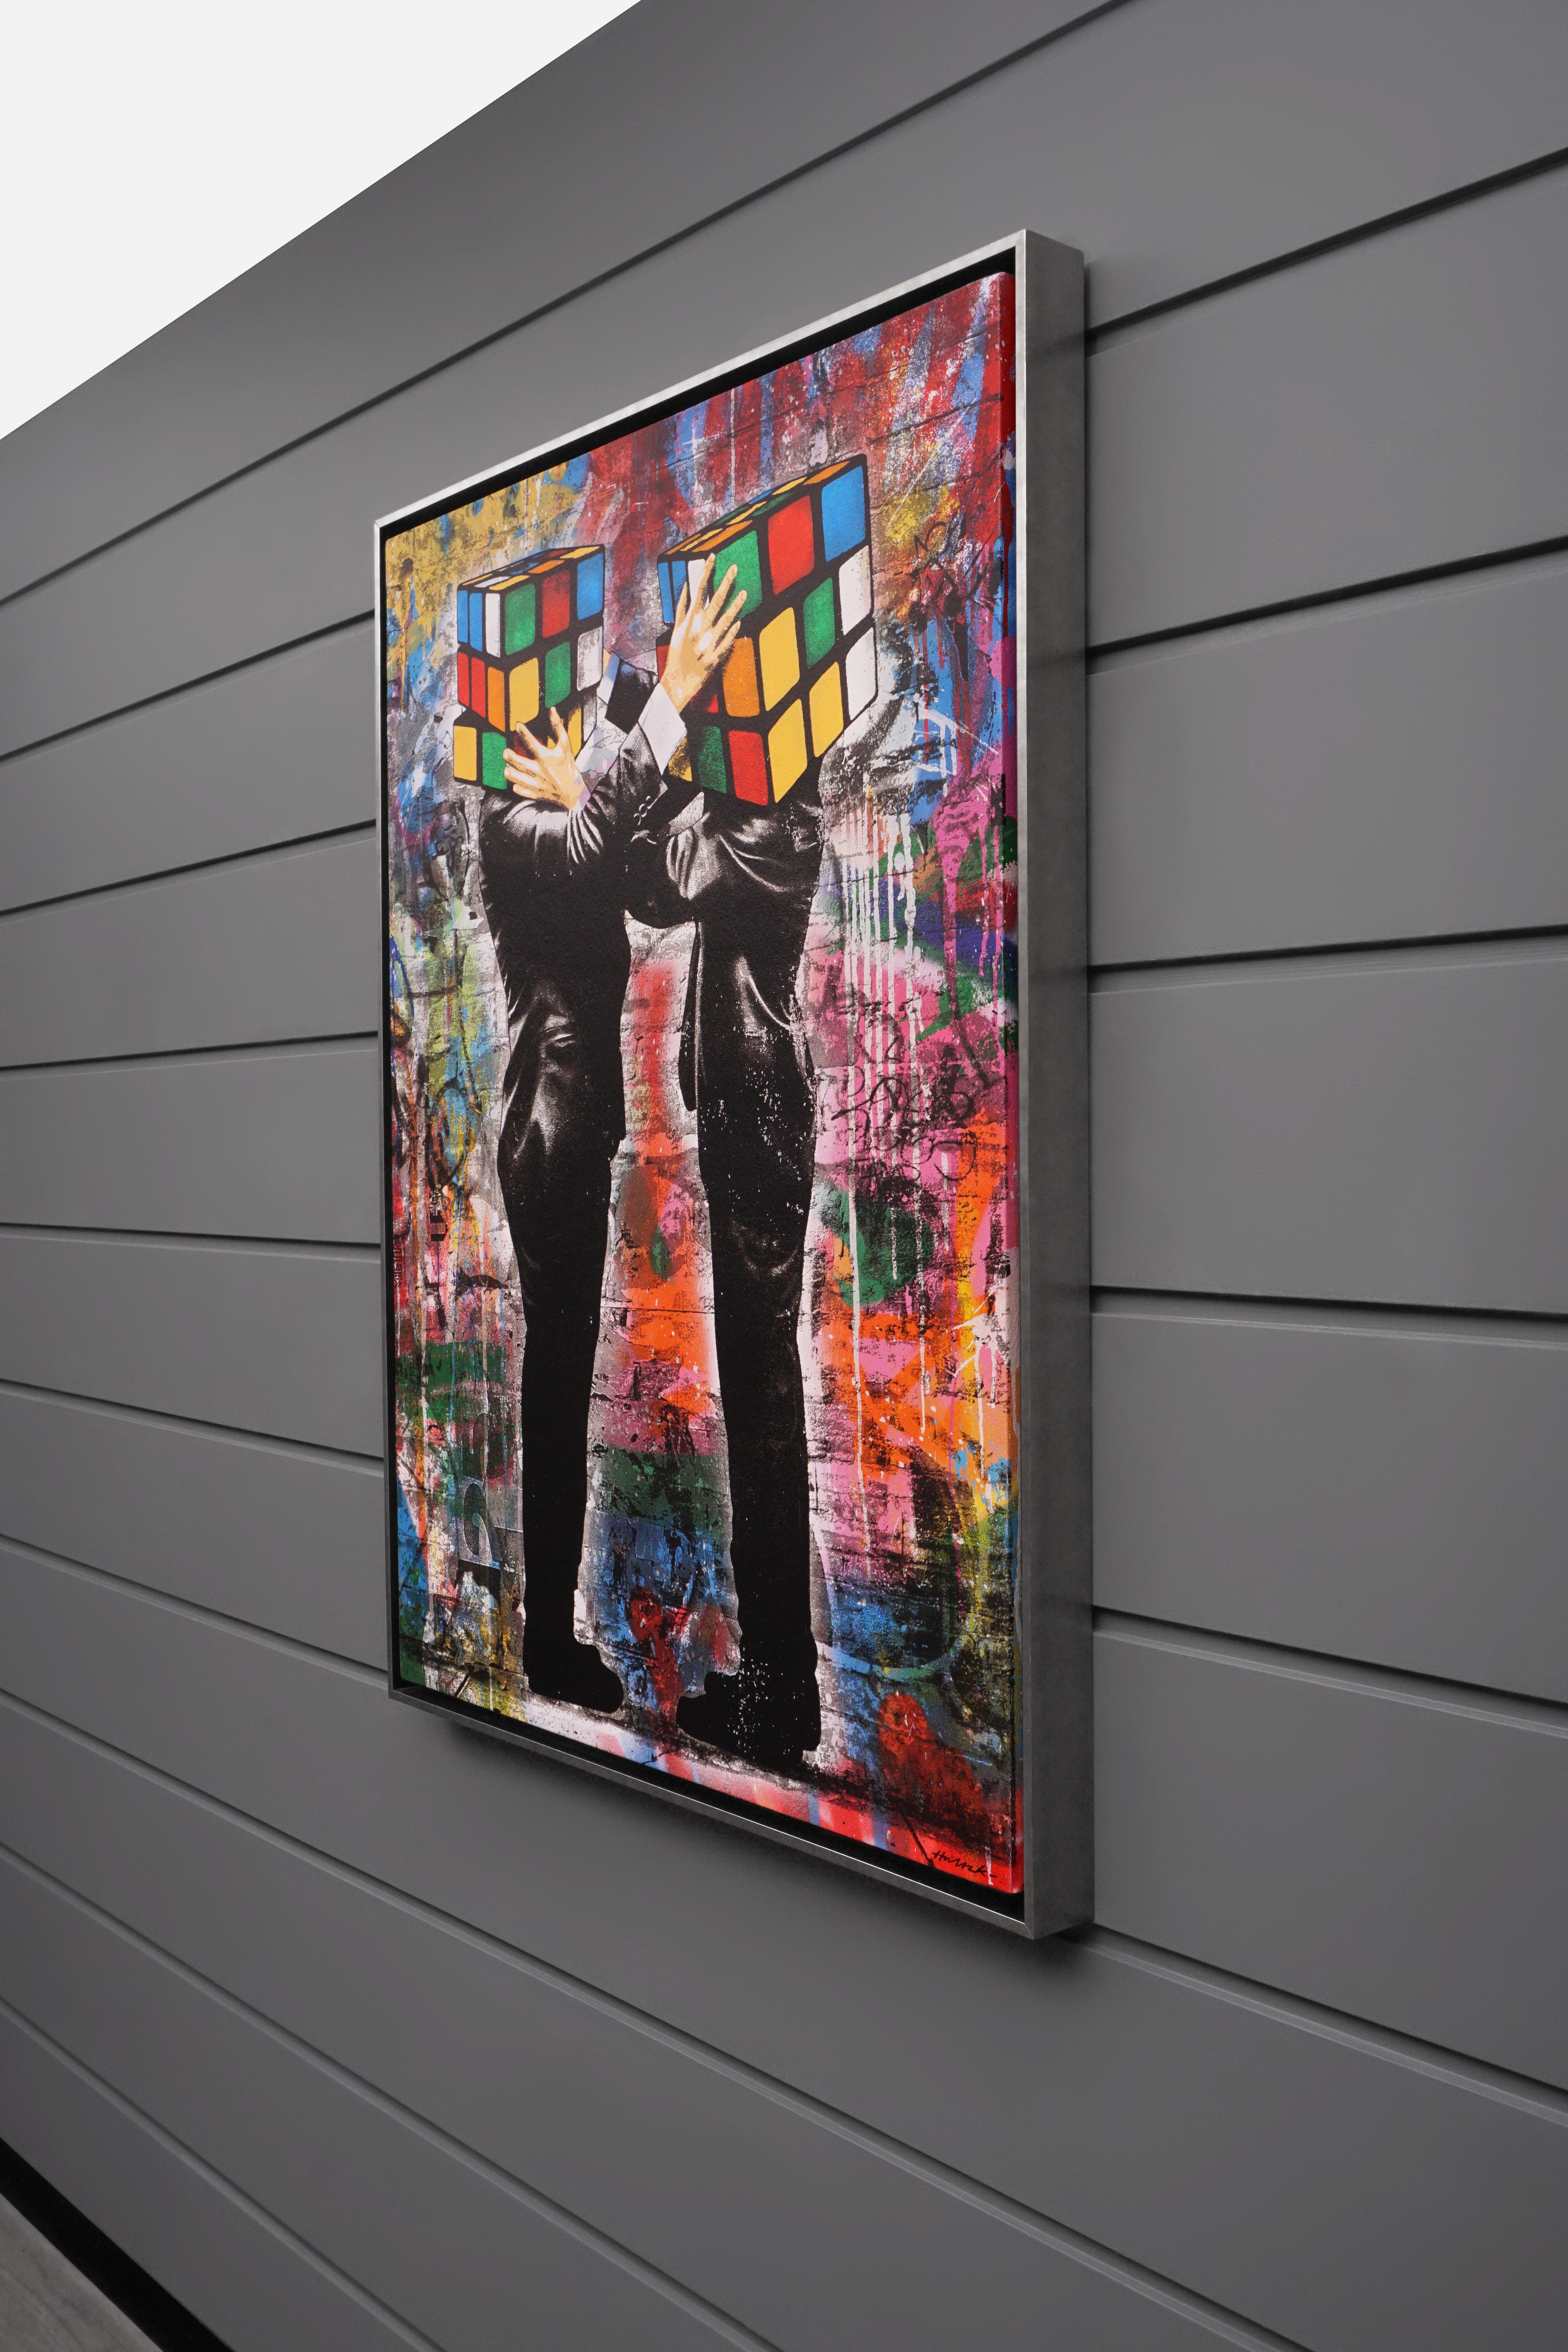 Hijack, 'Puzzled III' Street Pop Art on Canvas, 2021 2